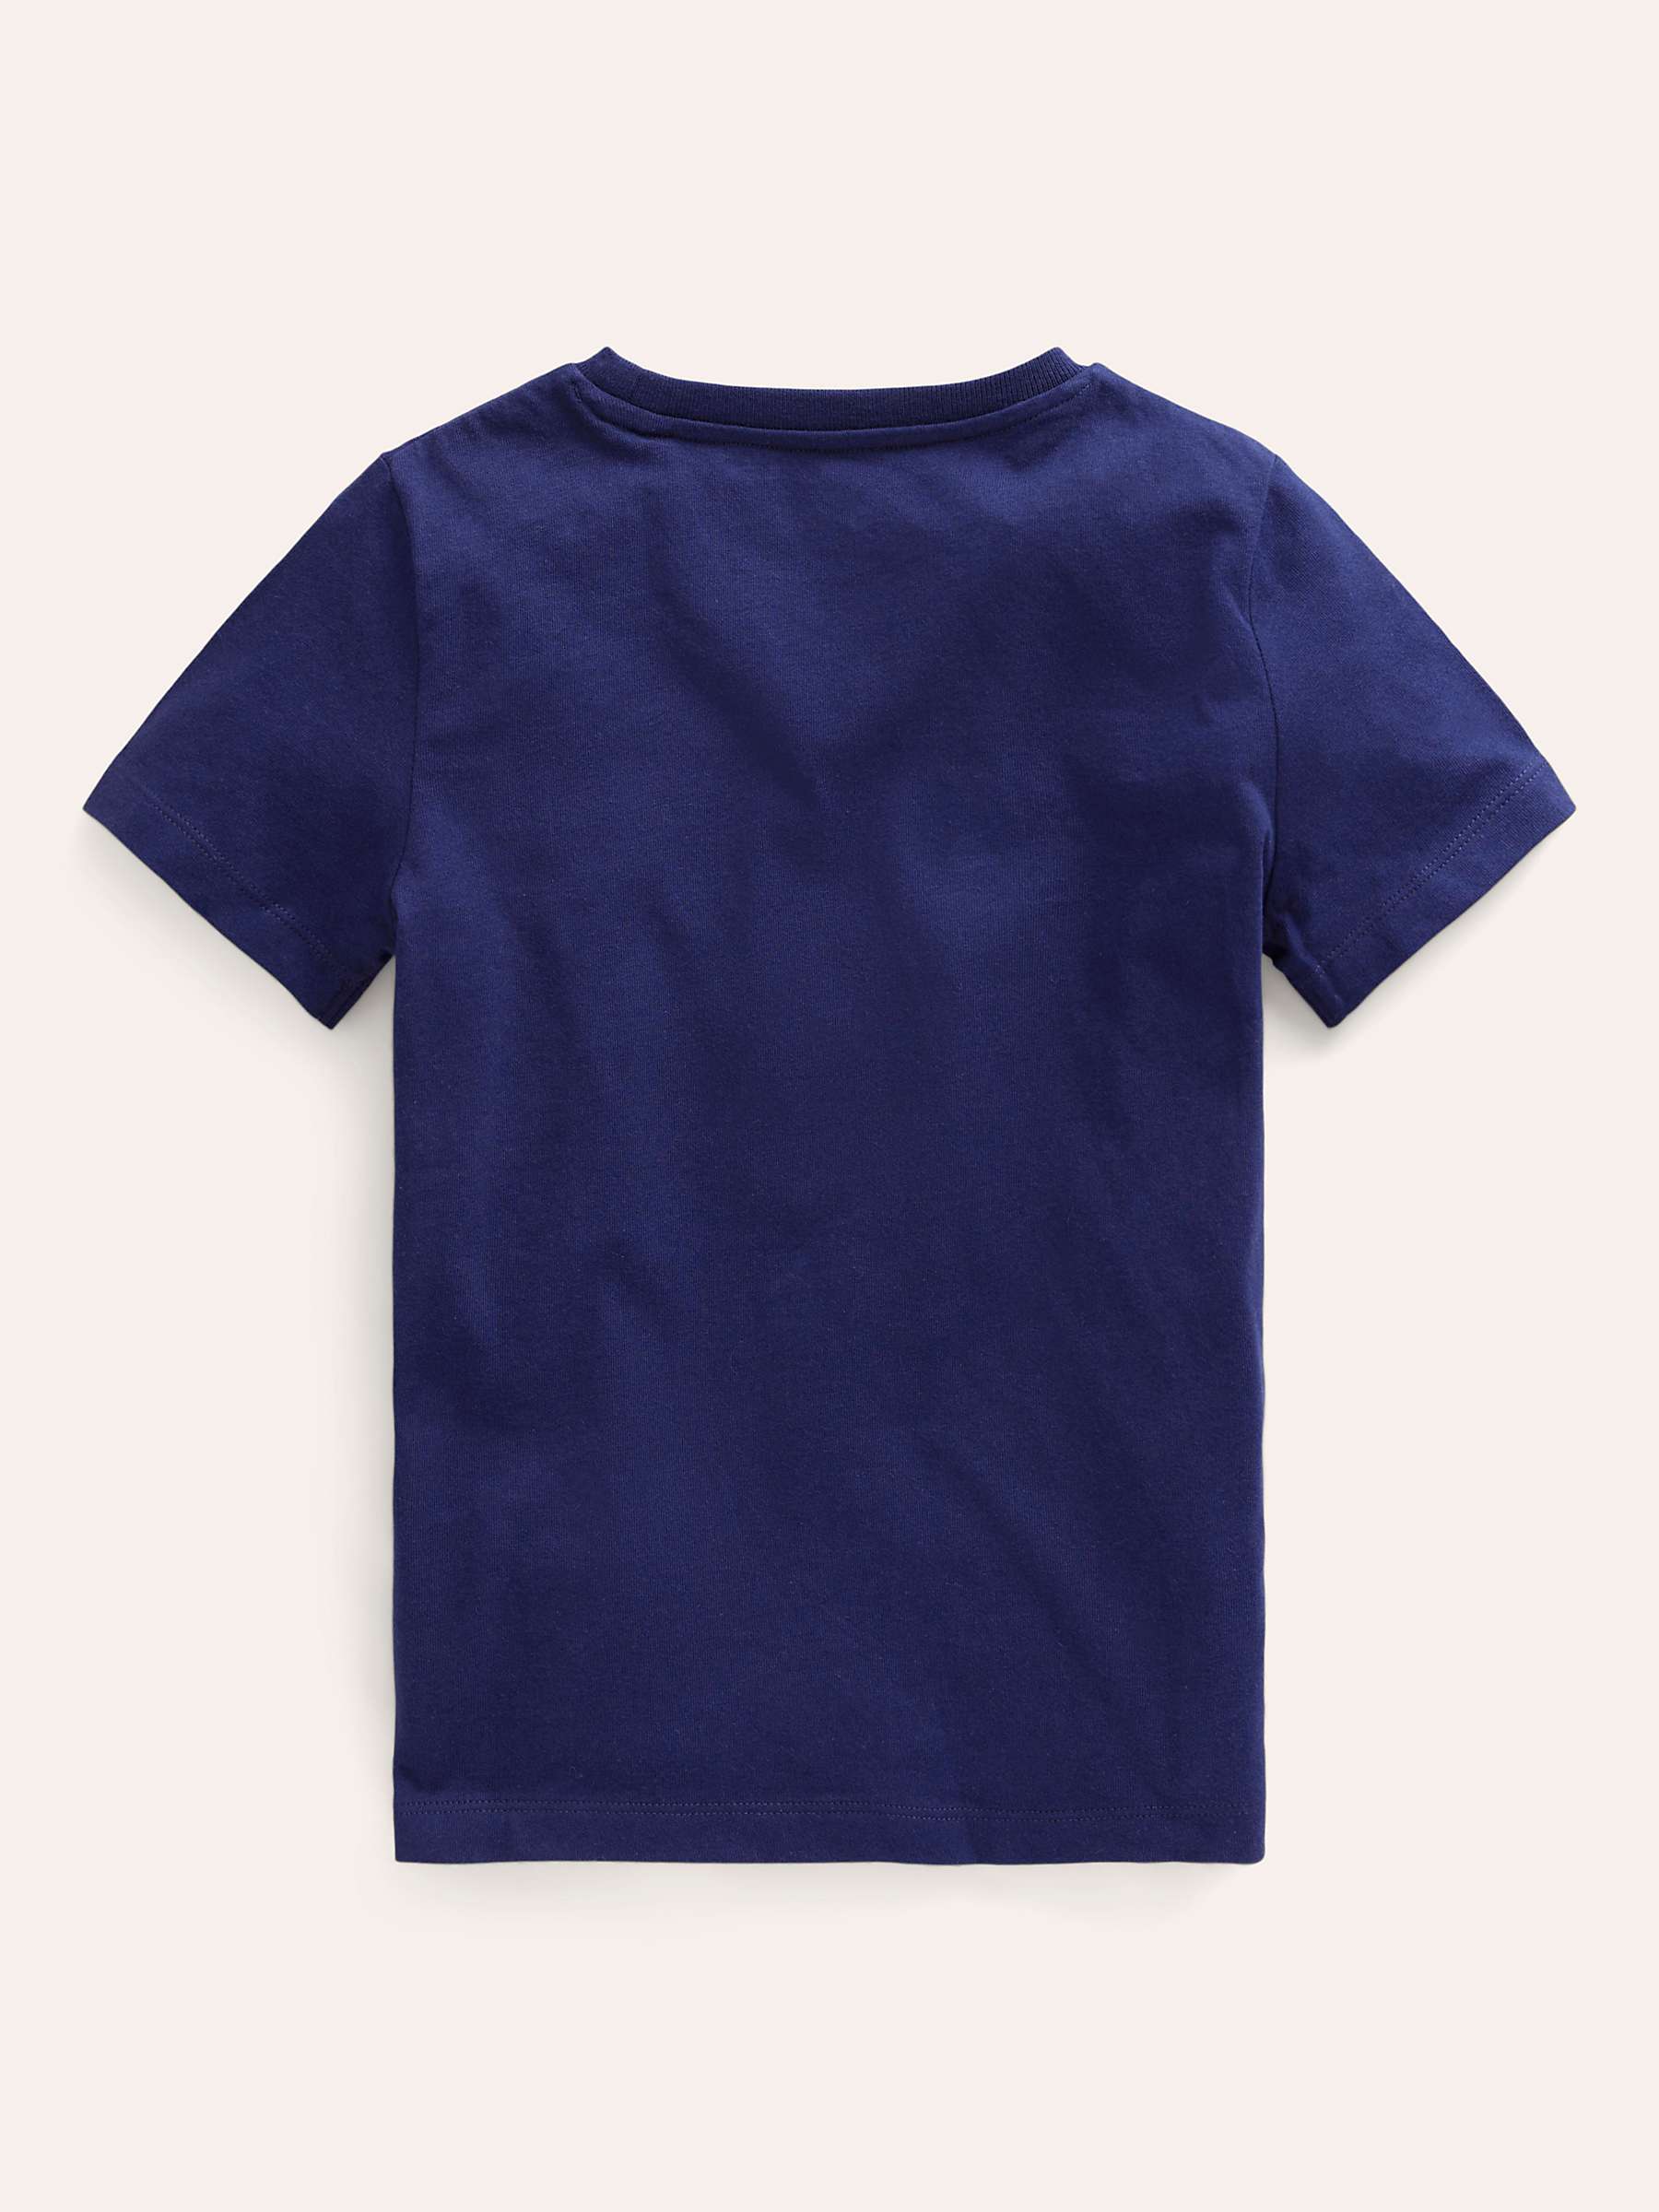 Buy Mini Boden Kids' Chainstitch Elephant T-Shirt, Navy/Multi Online at johnlewis.com